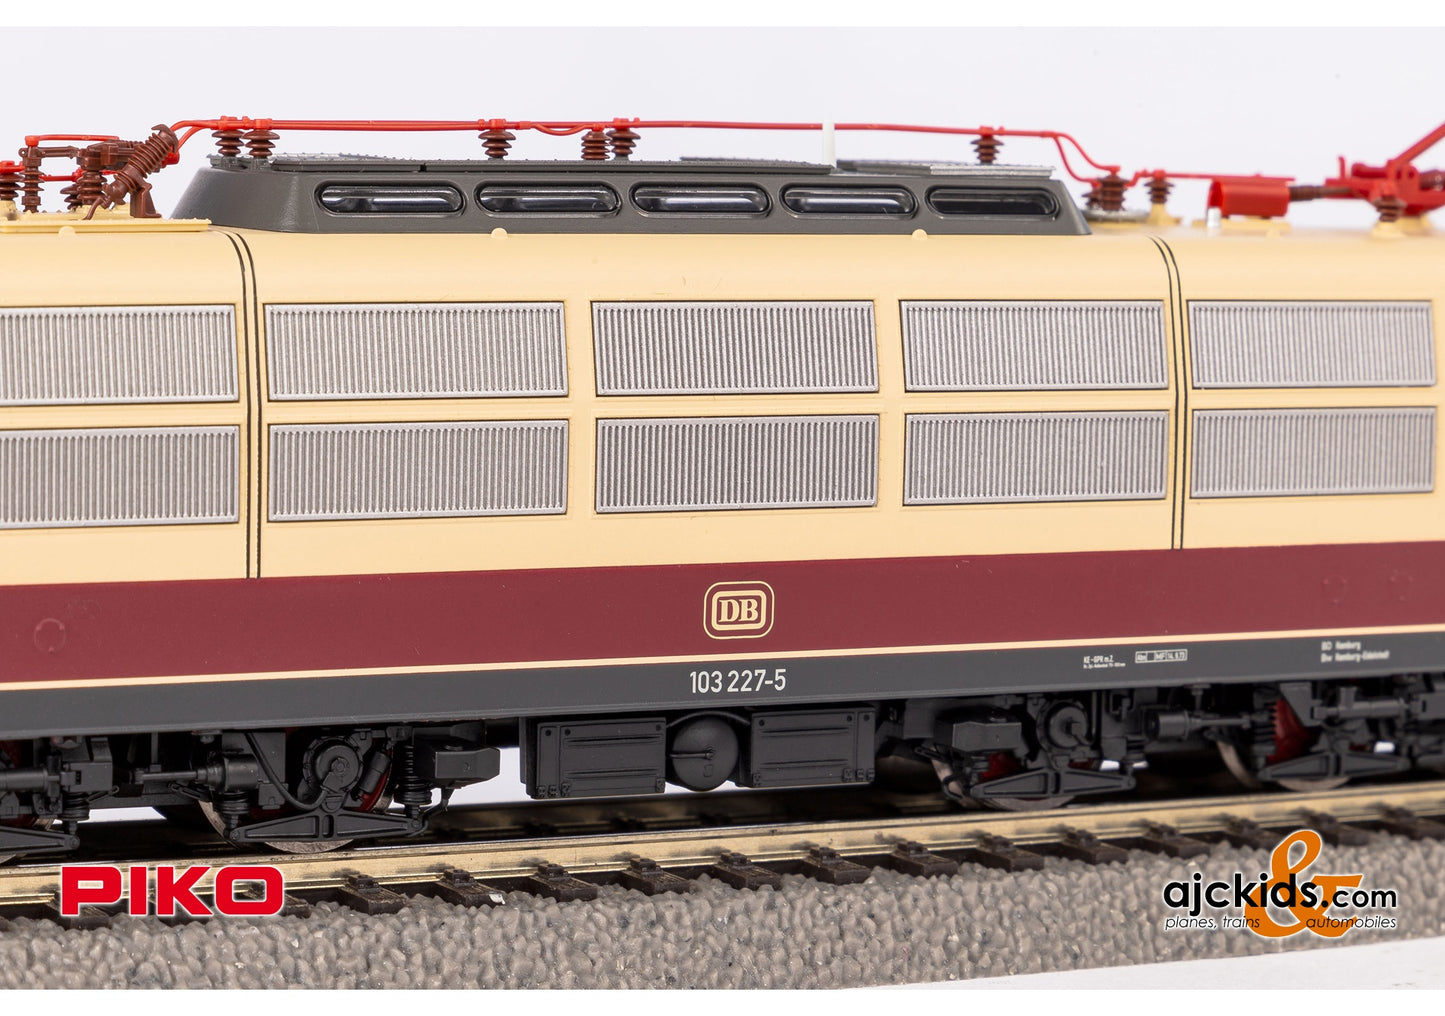 Piko 51688 - BR 103 Electric Locomotive DB IV Sound